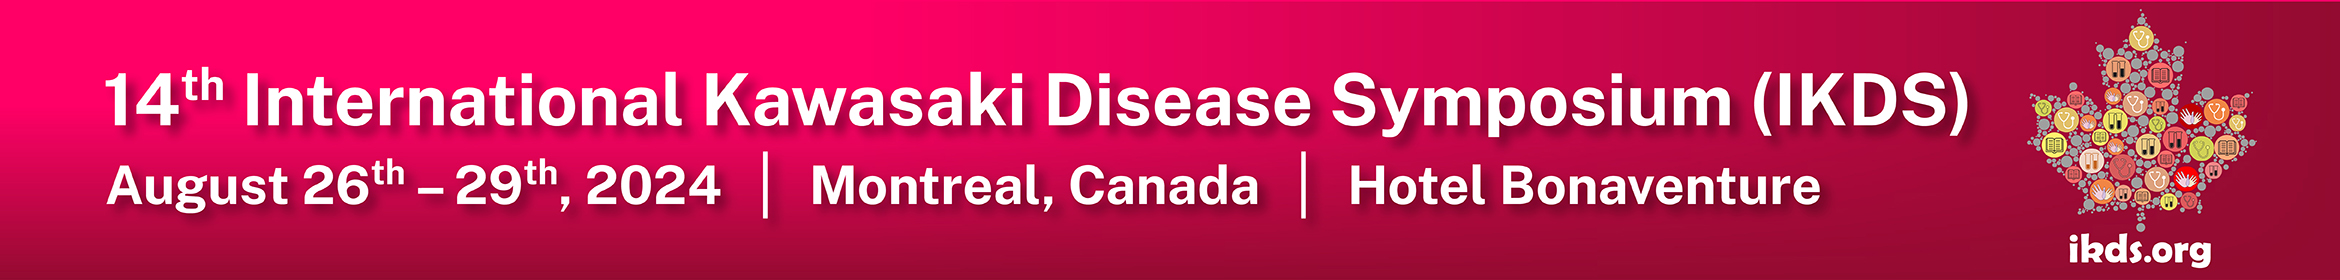 2024 International Kawasaki Disease Symposium Main banner